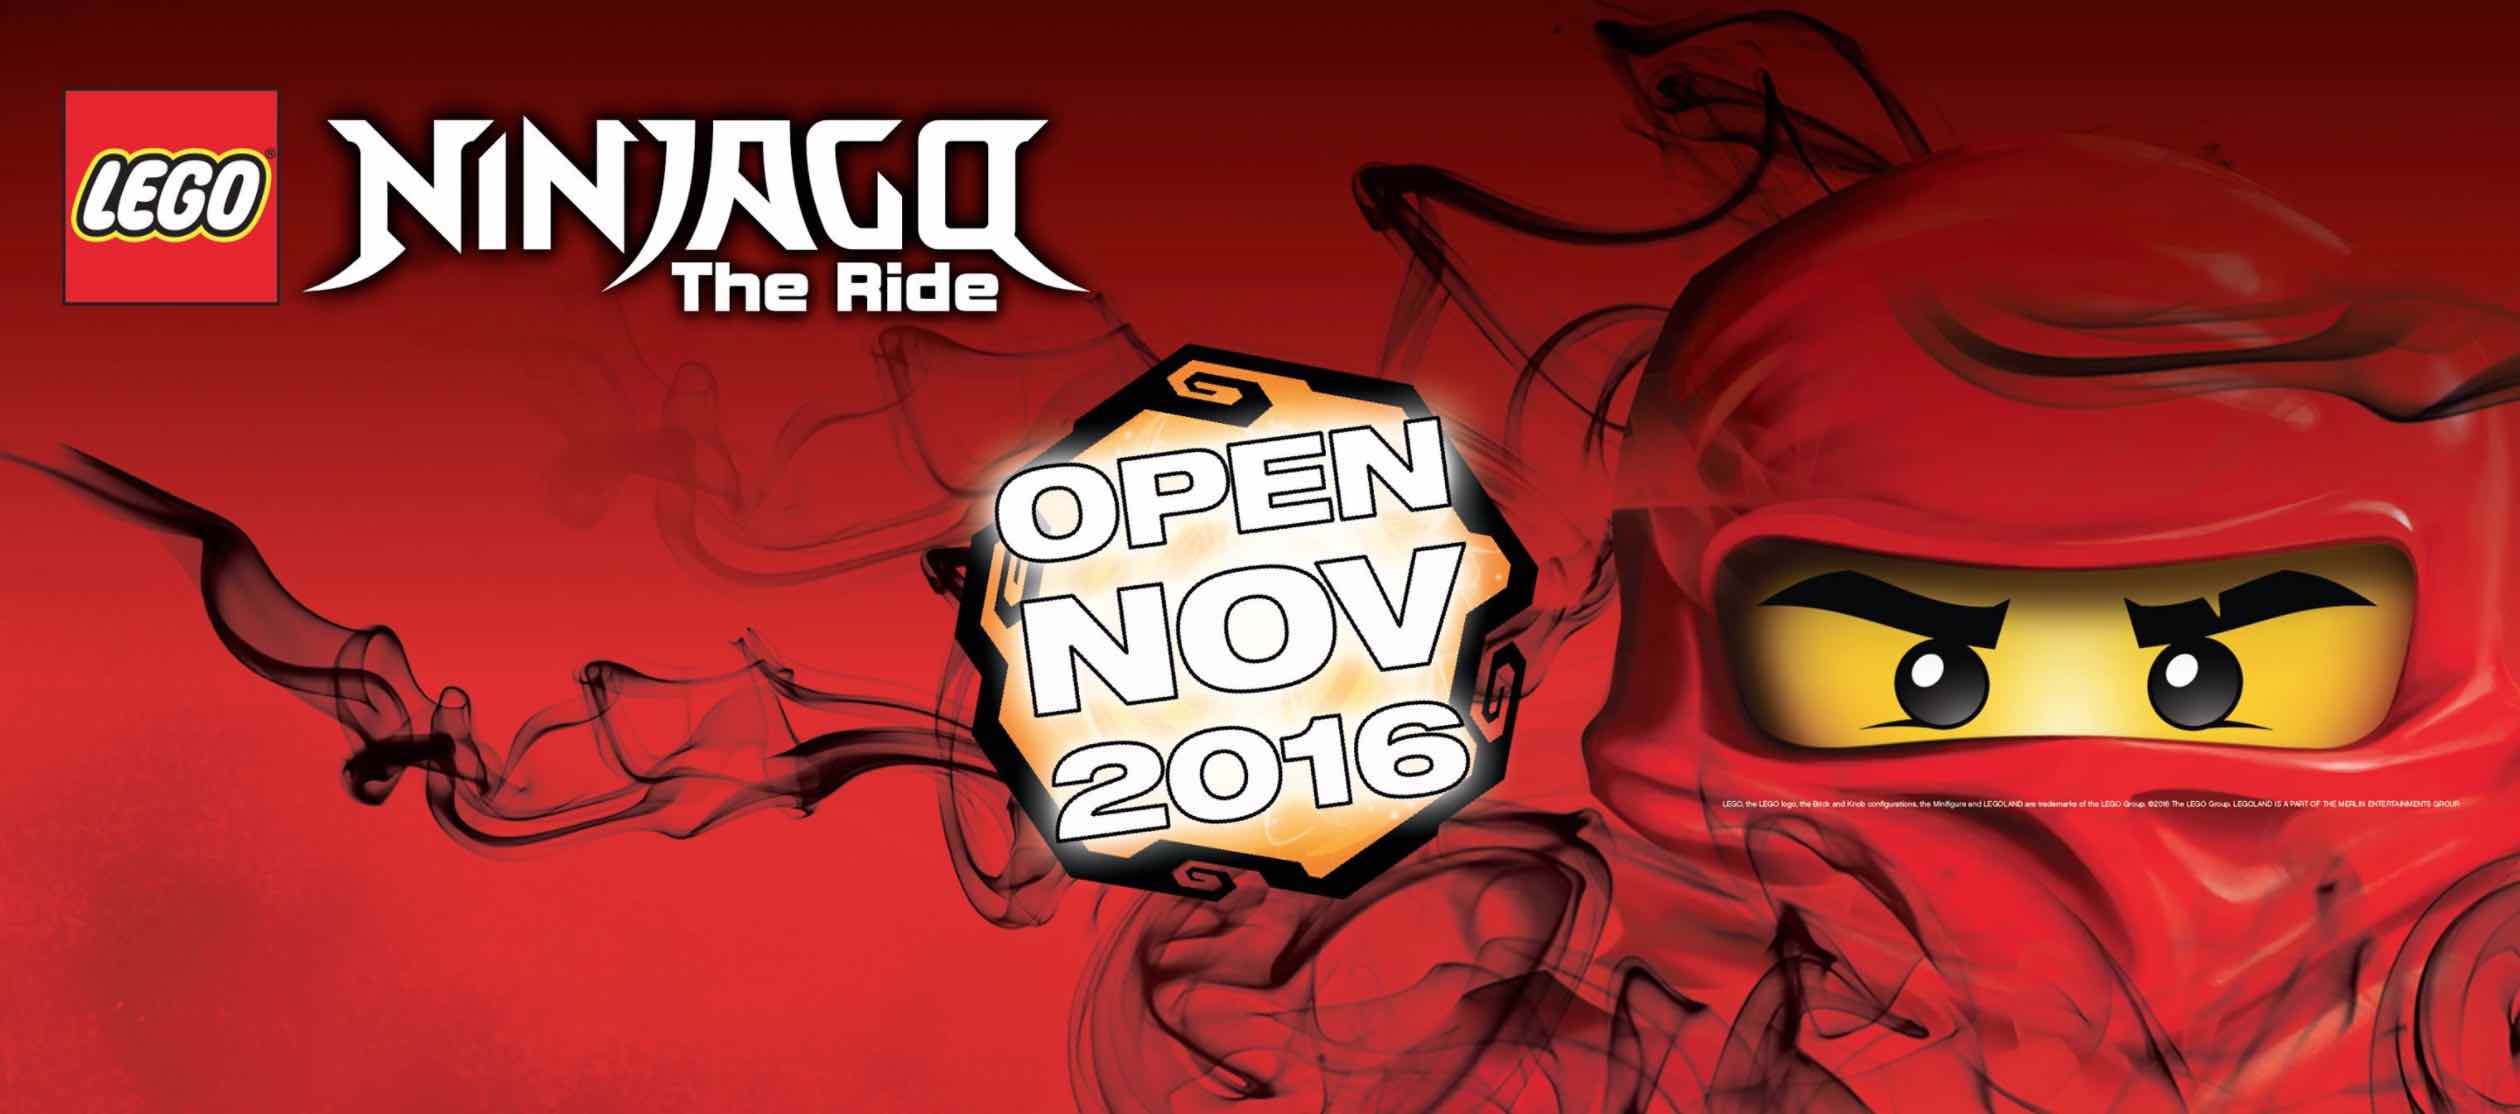 ninjago-the-ride-launched-in-legoland-malaysia-resort-aspirantsg